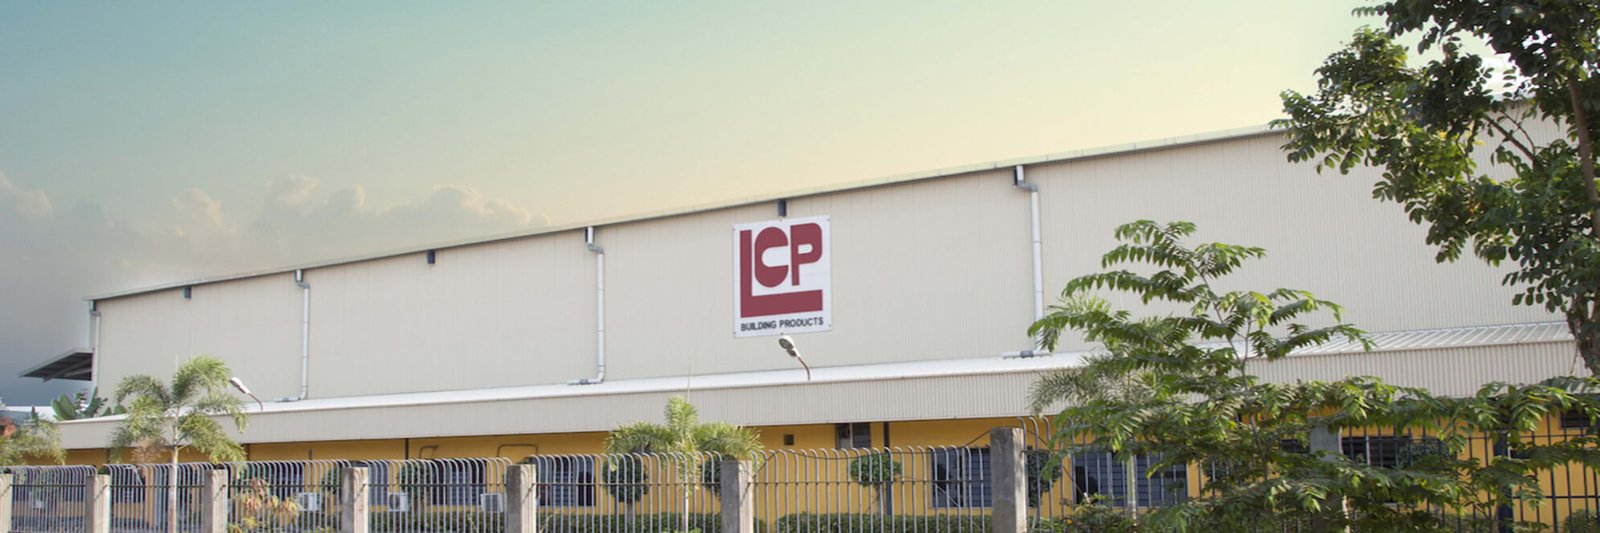 best roof sheet manufacturer in Saudi Arabia: LCP Sliders